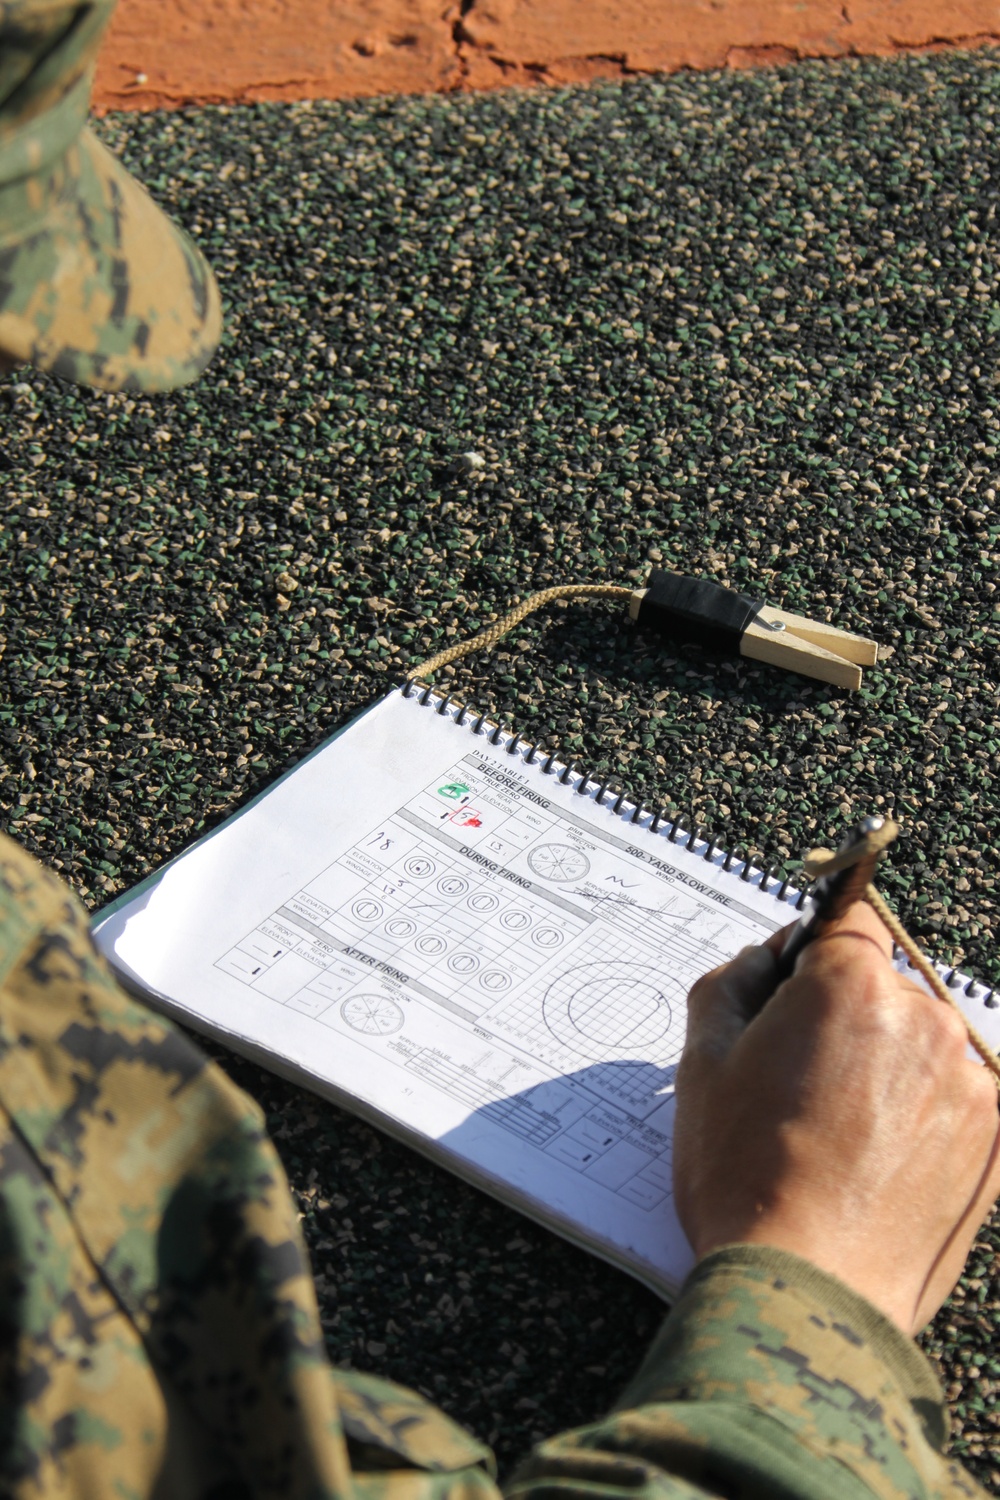 Company L recruits apply Marine Corps marksmanship skills